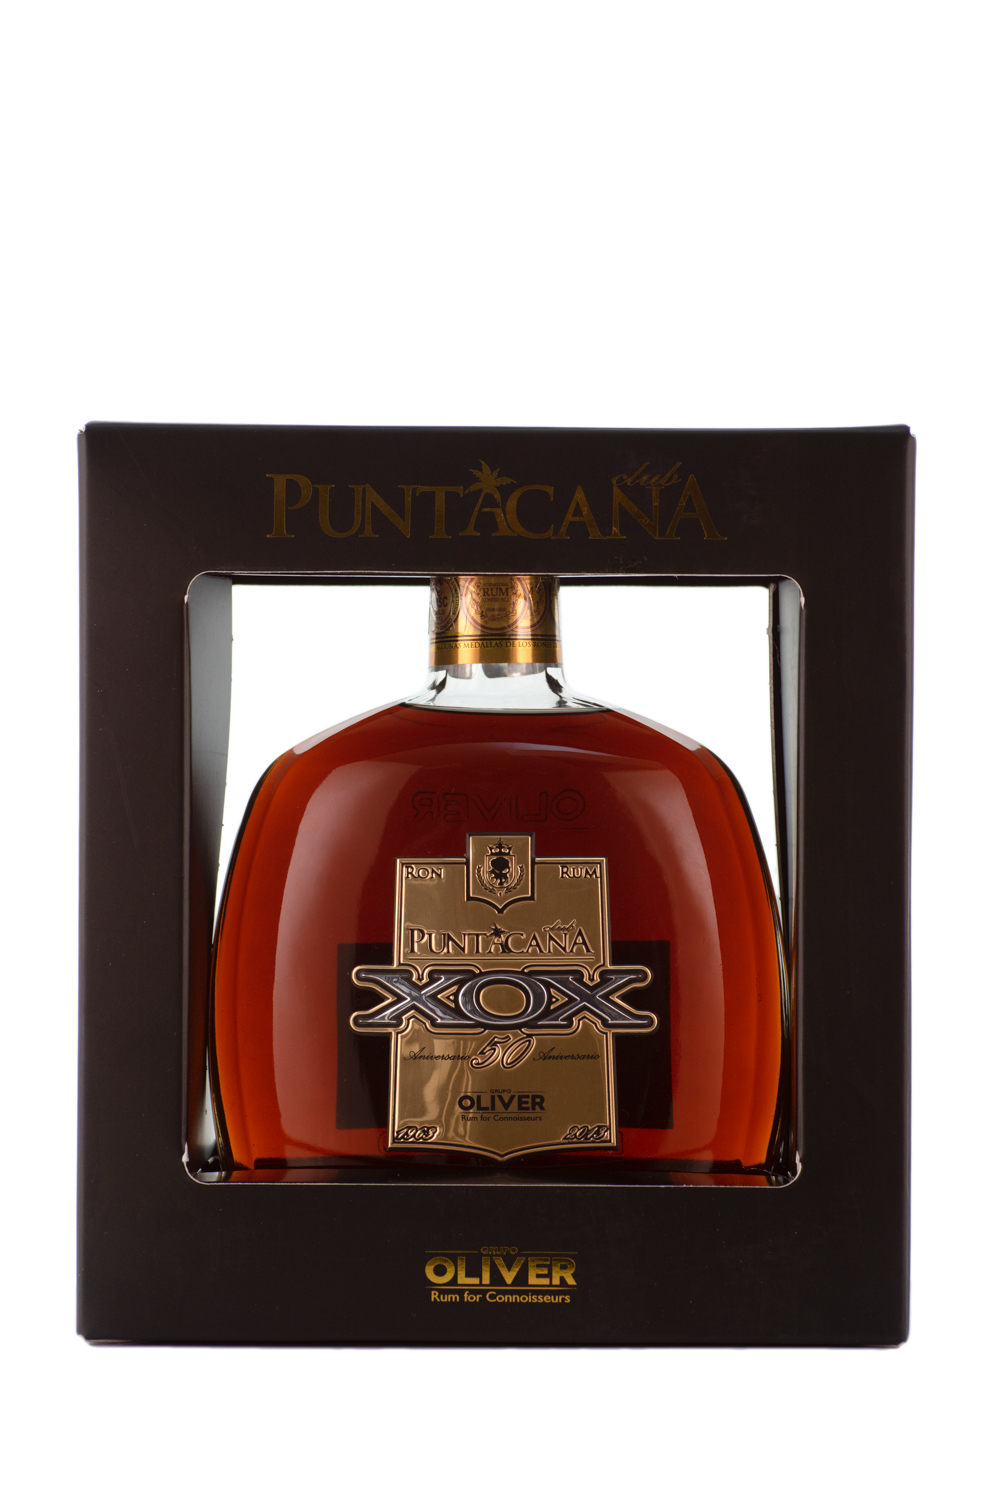 PuntaCana XOX 50 Aniversario Rum - 0,7L 40% vol